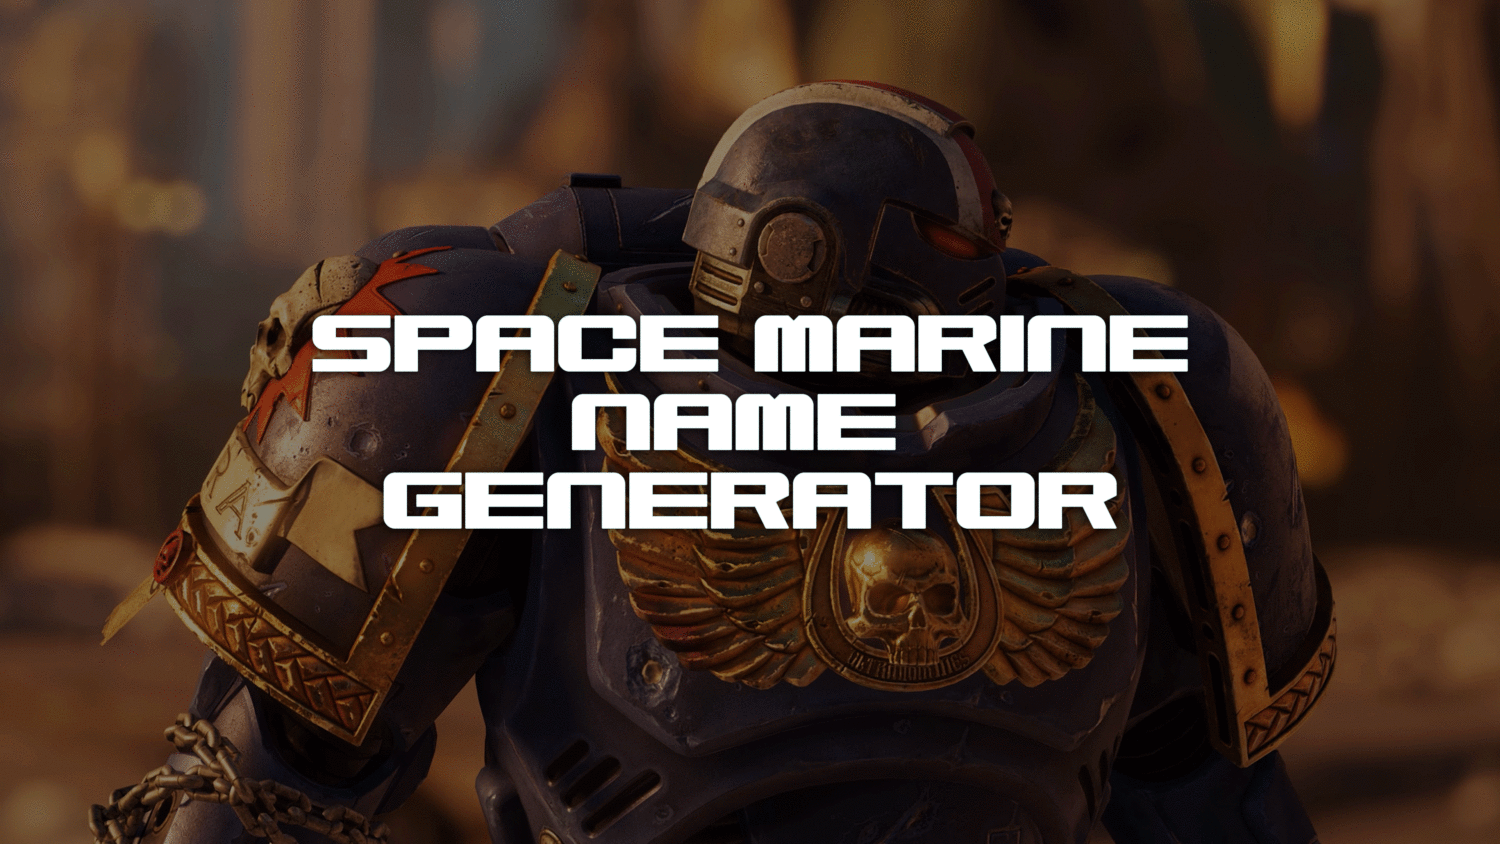 Space Marine Name Generator Image